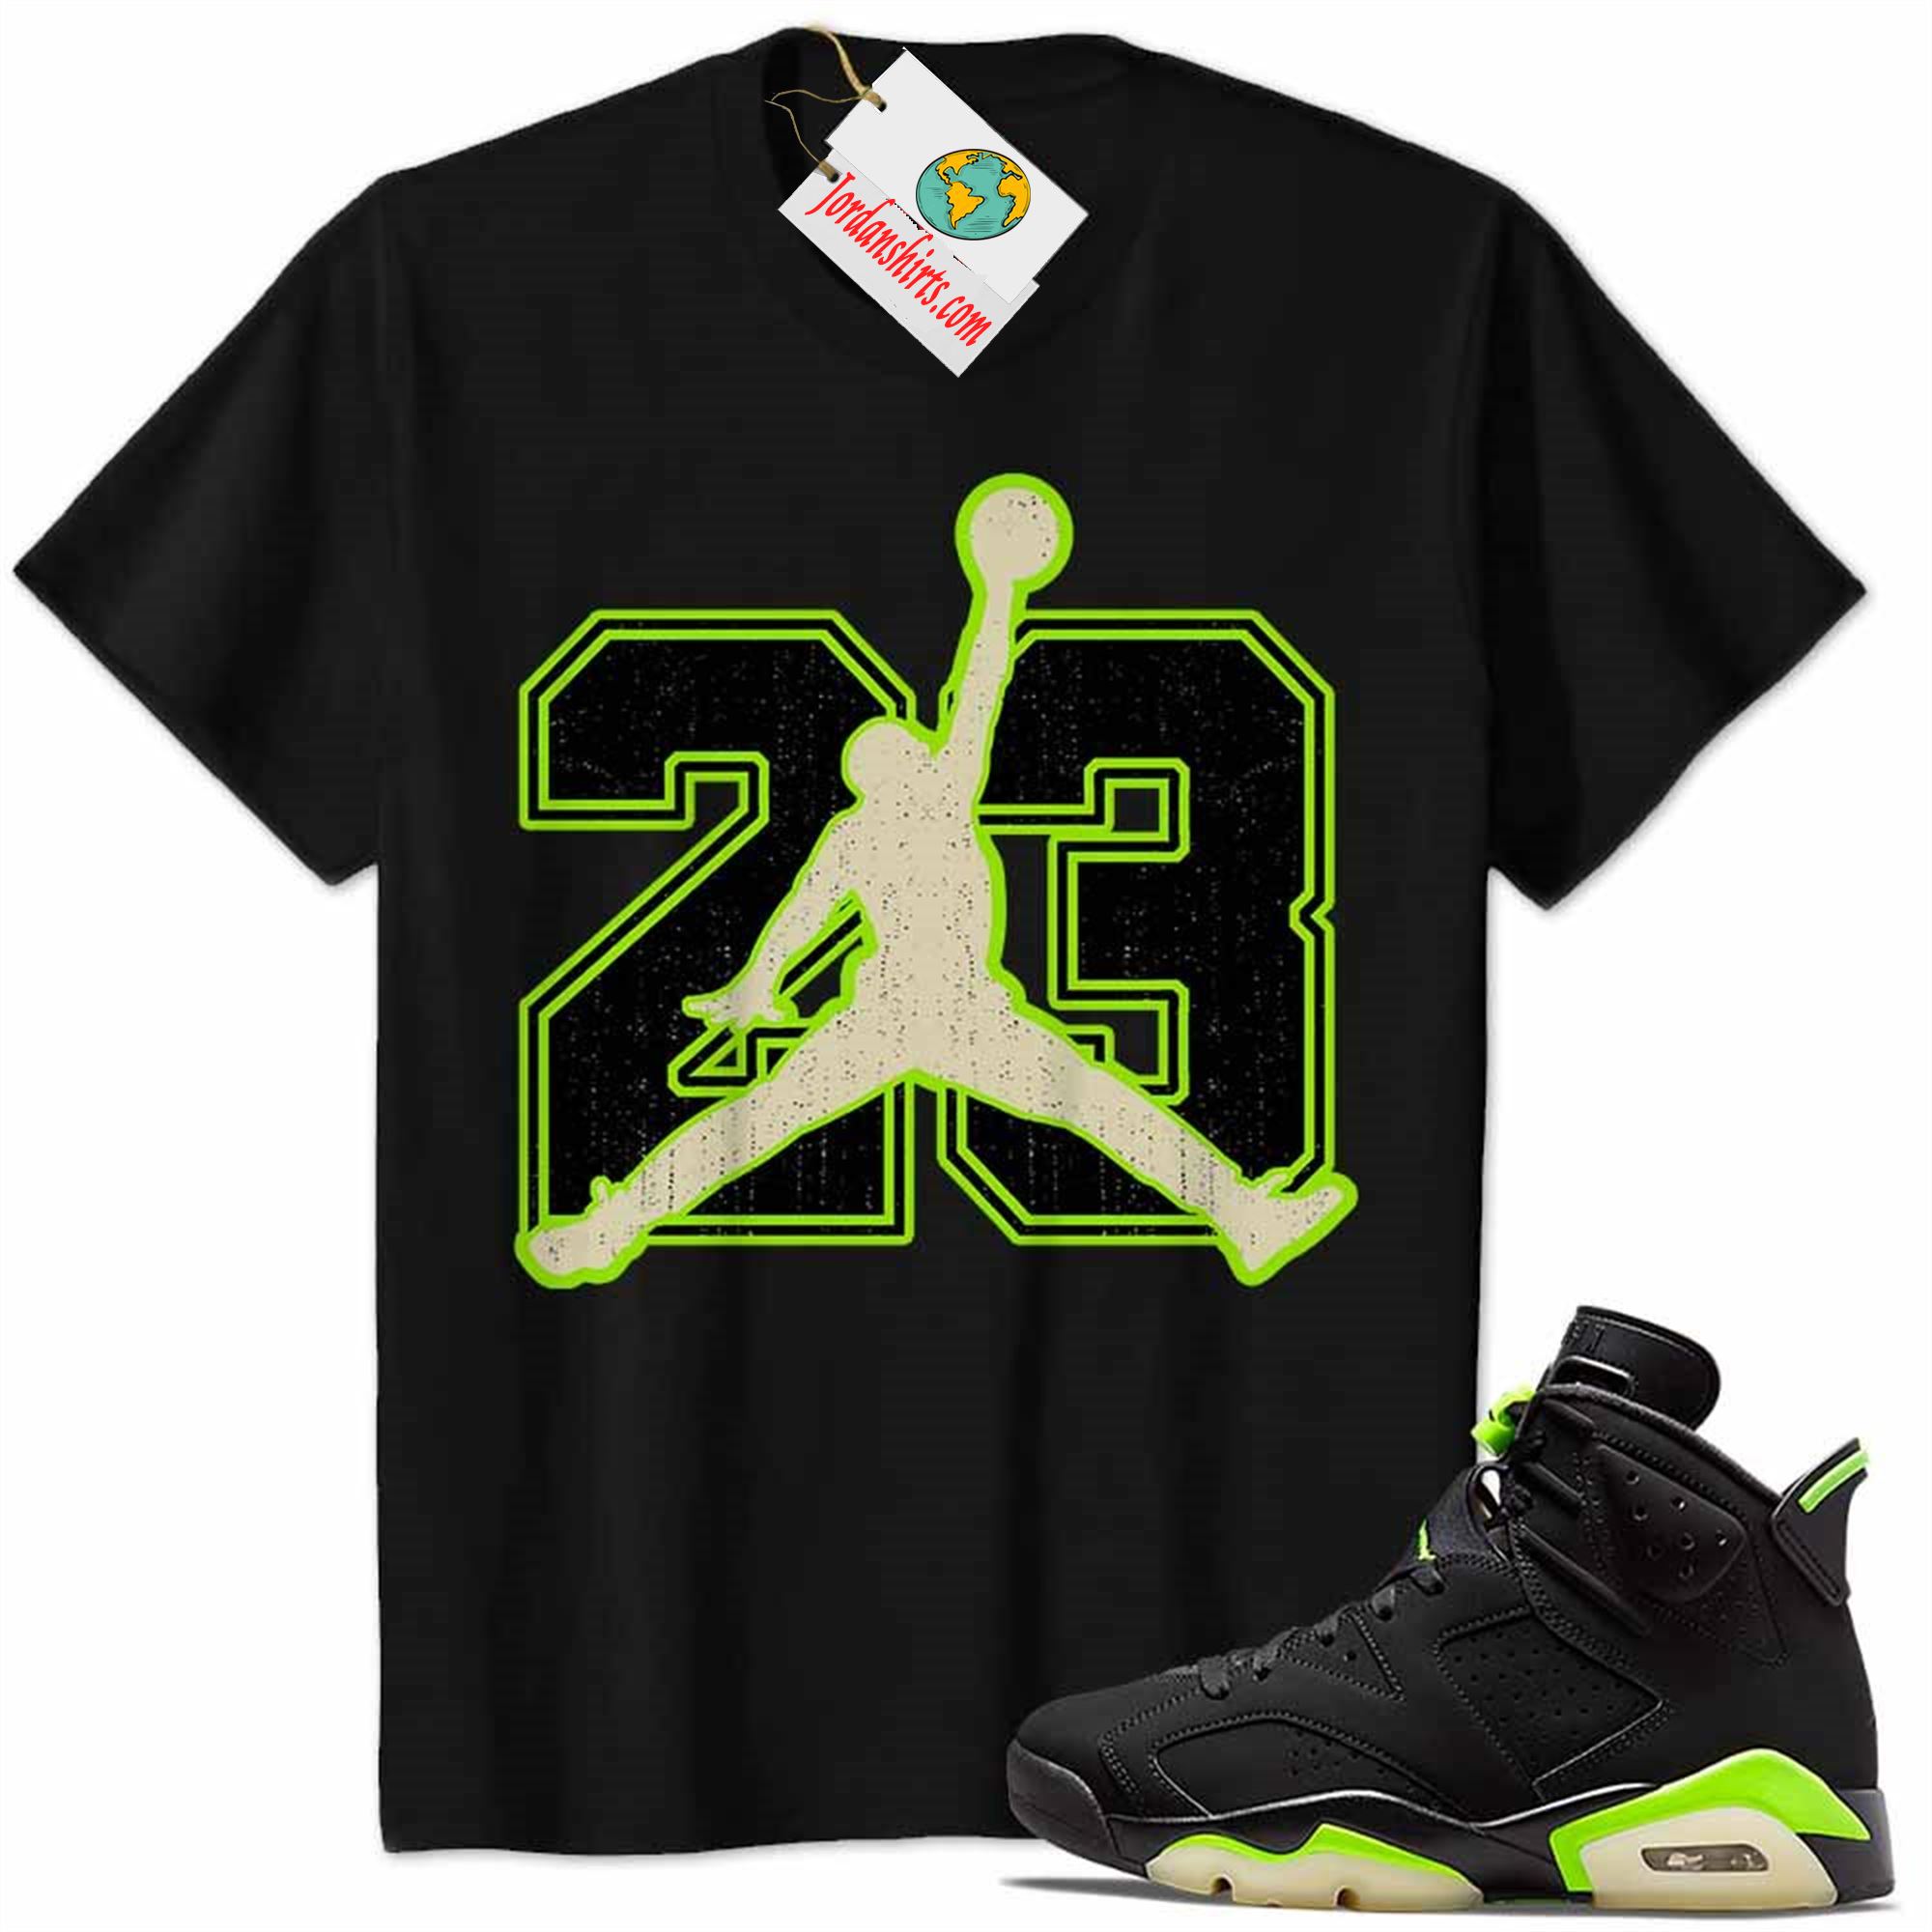 Jordan 6 Shirt, Jordan 6 Electric Green Shirt Jumpman No23 Black Plus Size Up To 5xl